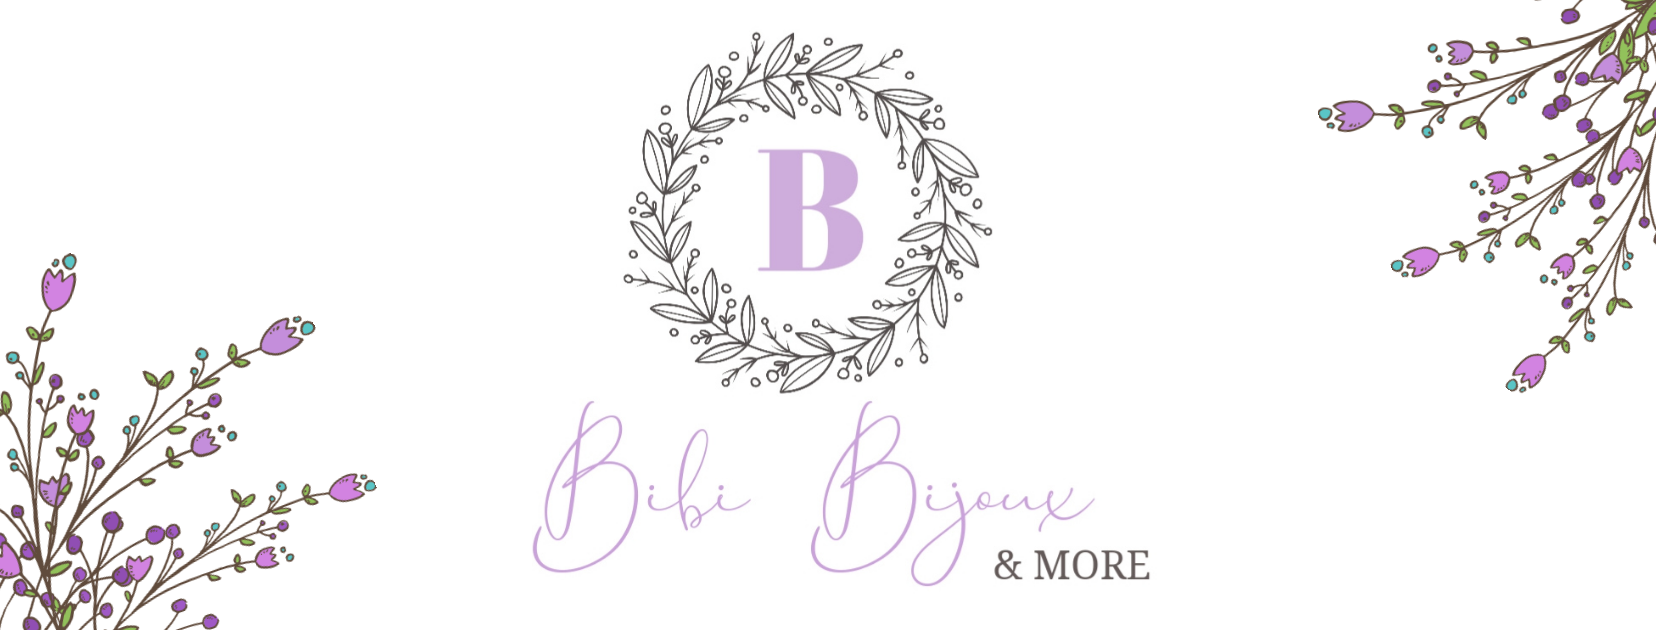 Bi.bi.bijoux & more